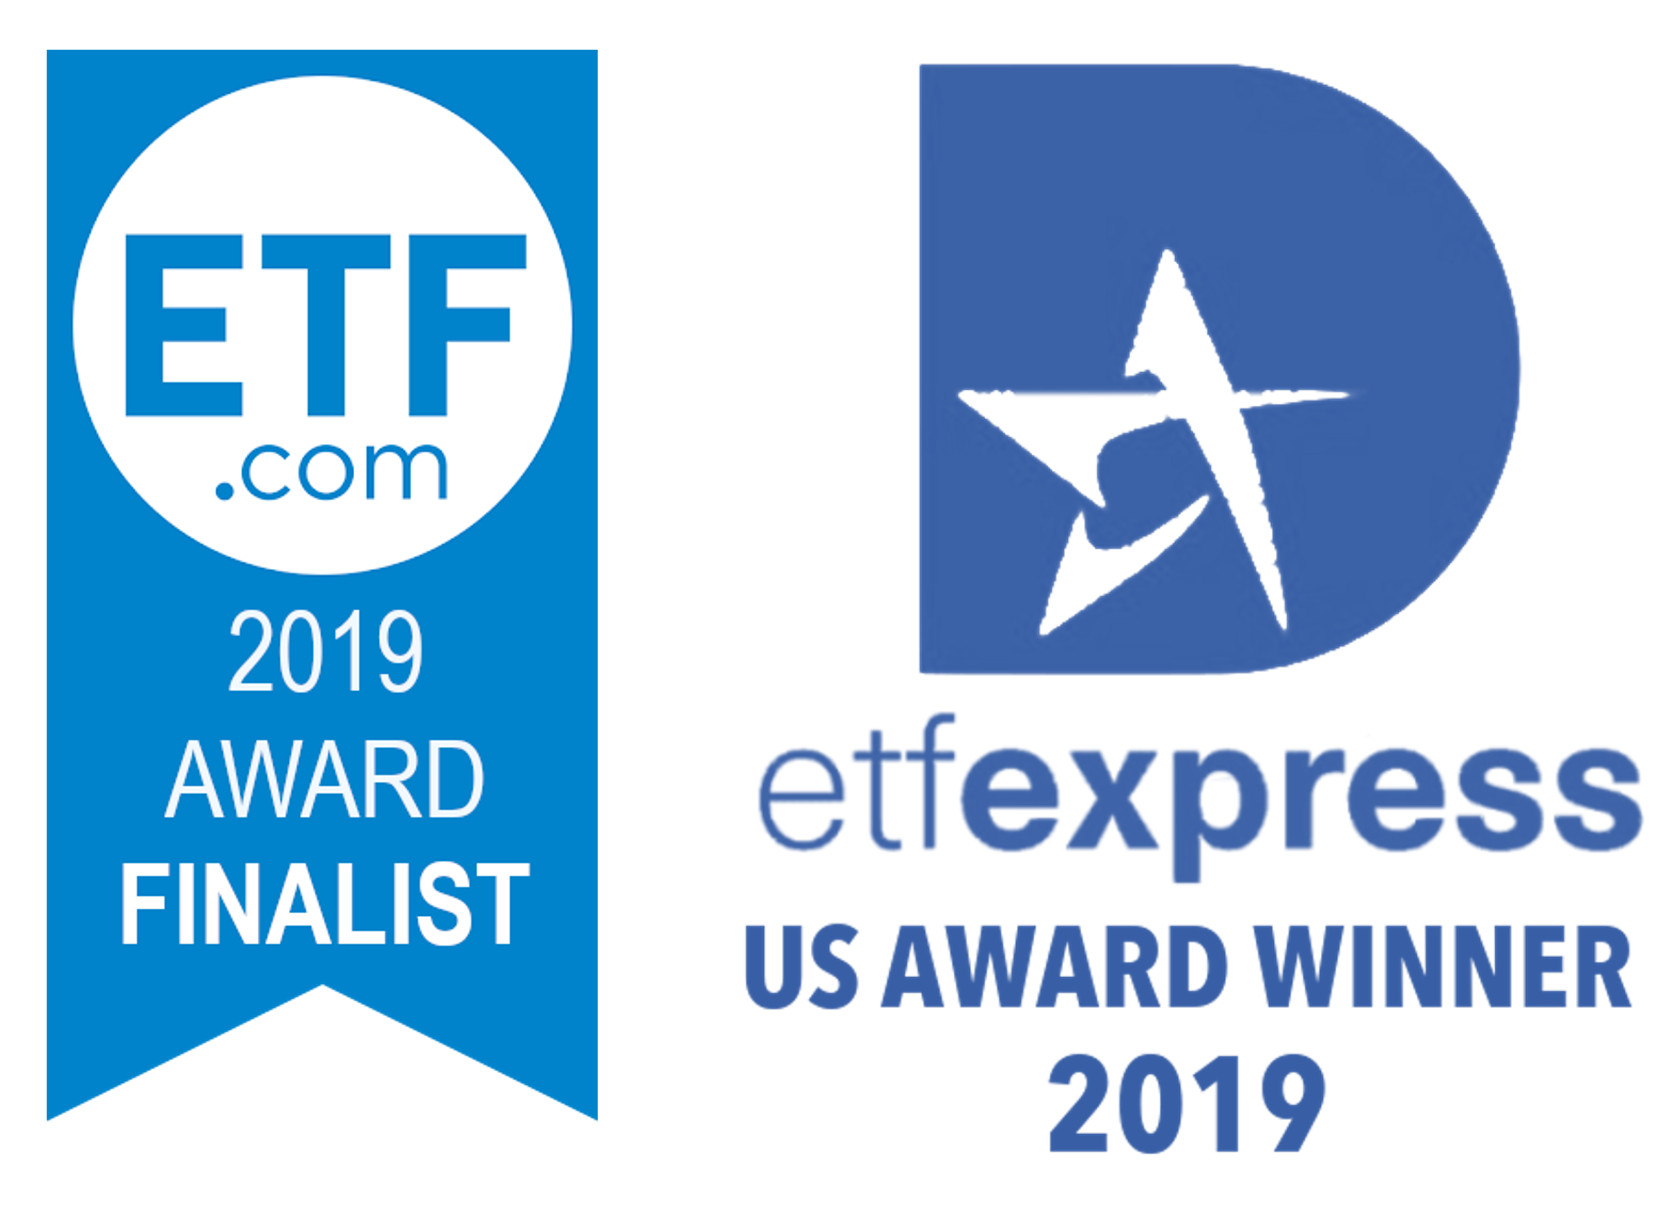 An Award-Winning ETF